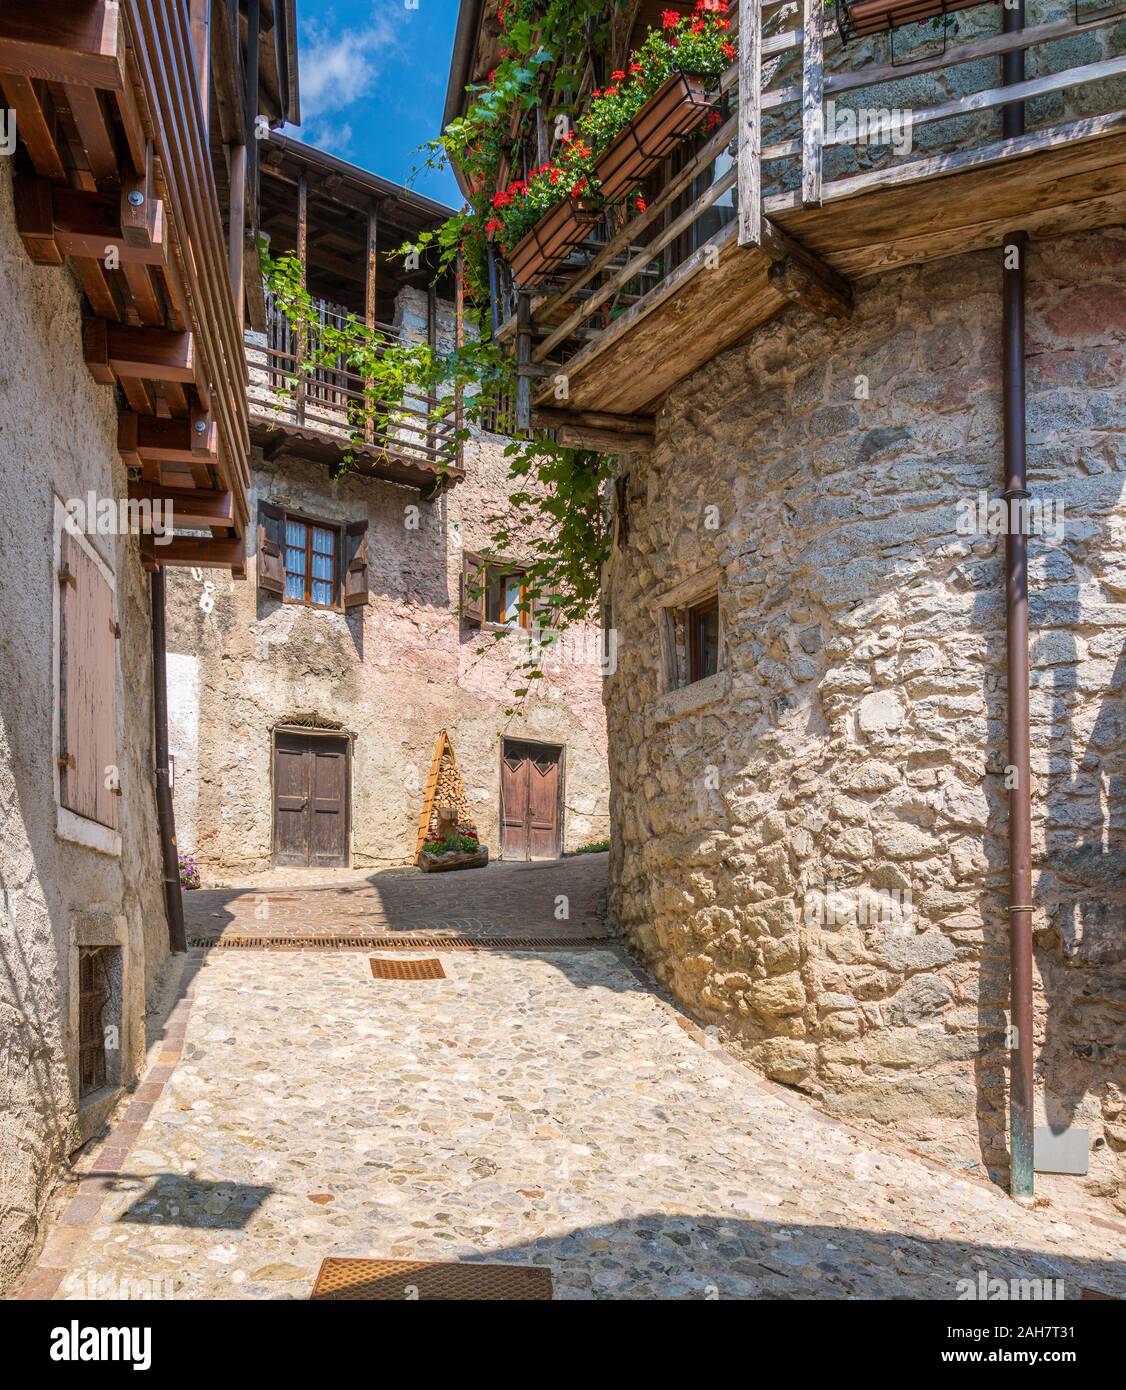 Das malerische Dorf Rango, in der Provinz Trient, Trentino Alto Adige, Italien. Stockfoto